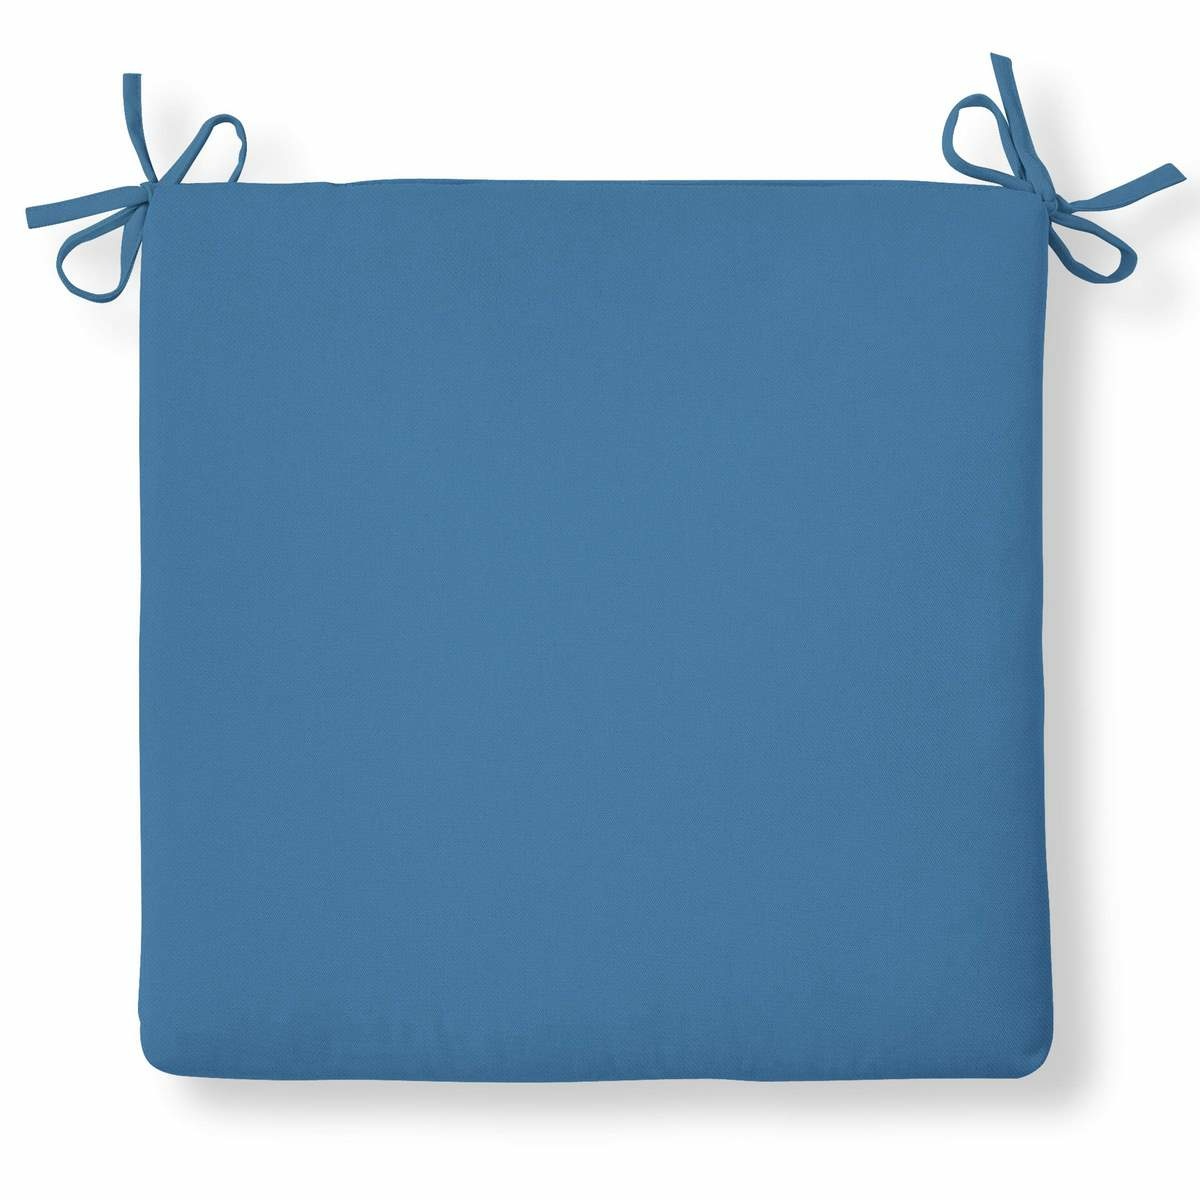 Perna sezut Domarex Oxford Mia impermeabil, albastru, 40 x 40 cm